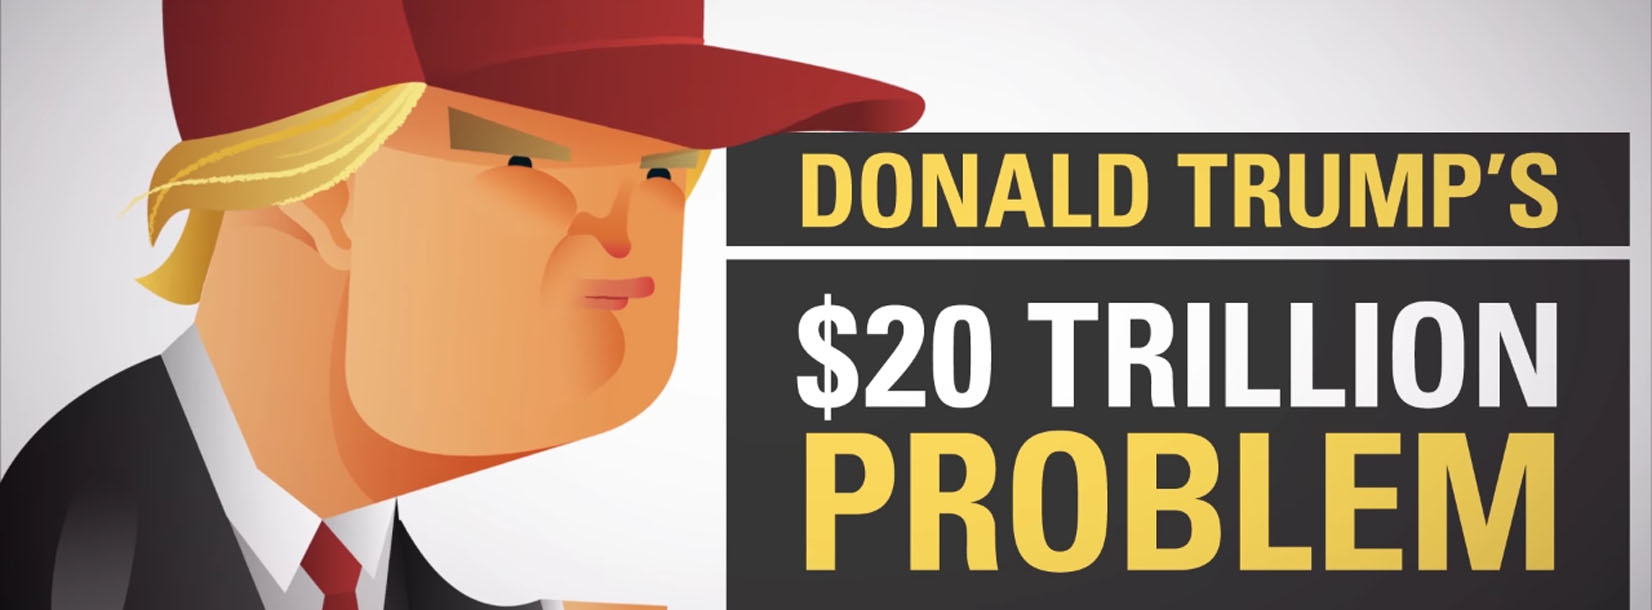 Video: Donald Trump’s $20 Trillion Problem